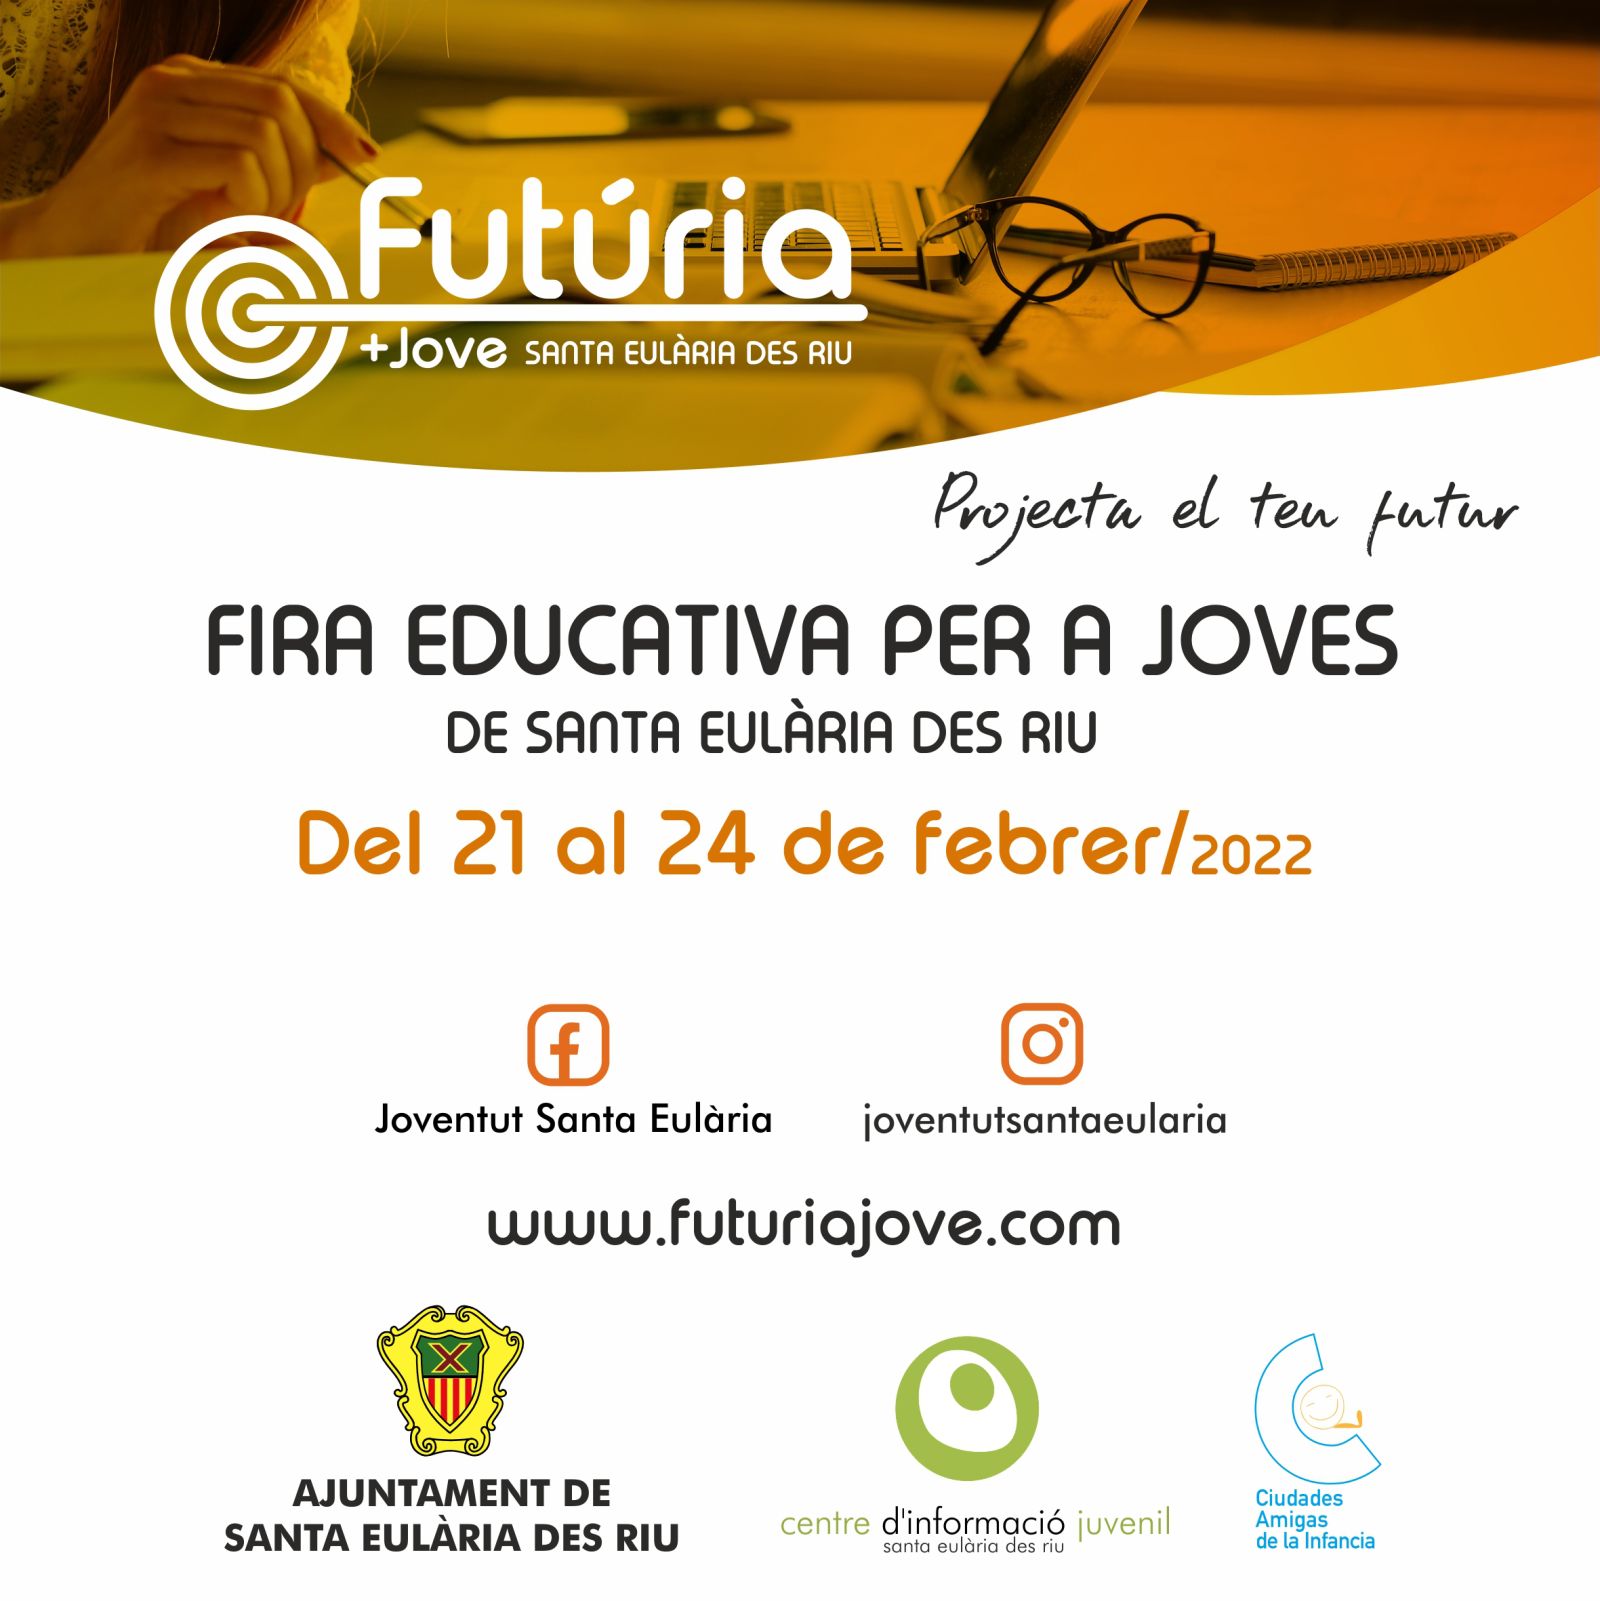 Santa Eulària des Riu organiza la octava edición de 'Futúria + Jove'